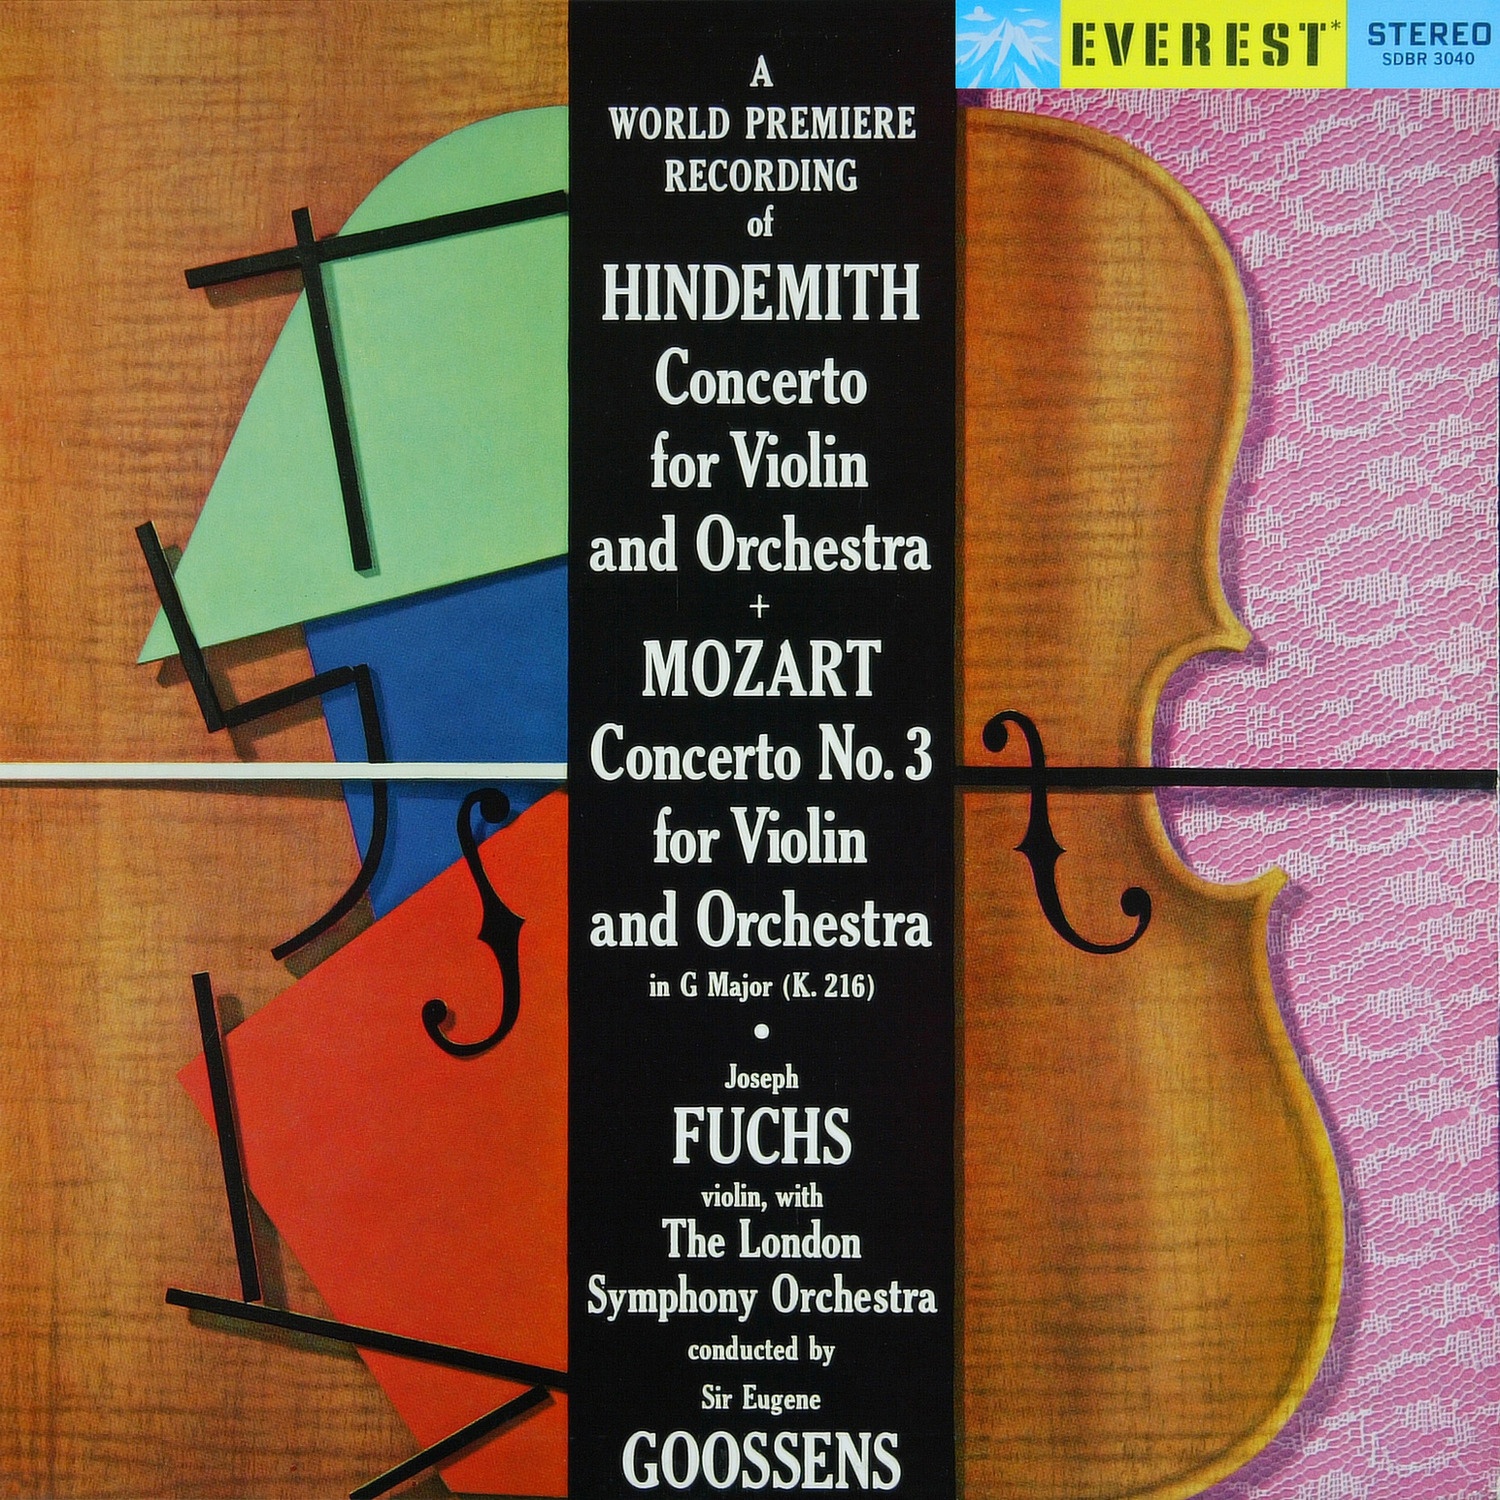 Concerto for Violin and Orchestra No. 3 in G Major, K. 216: II. Adagio